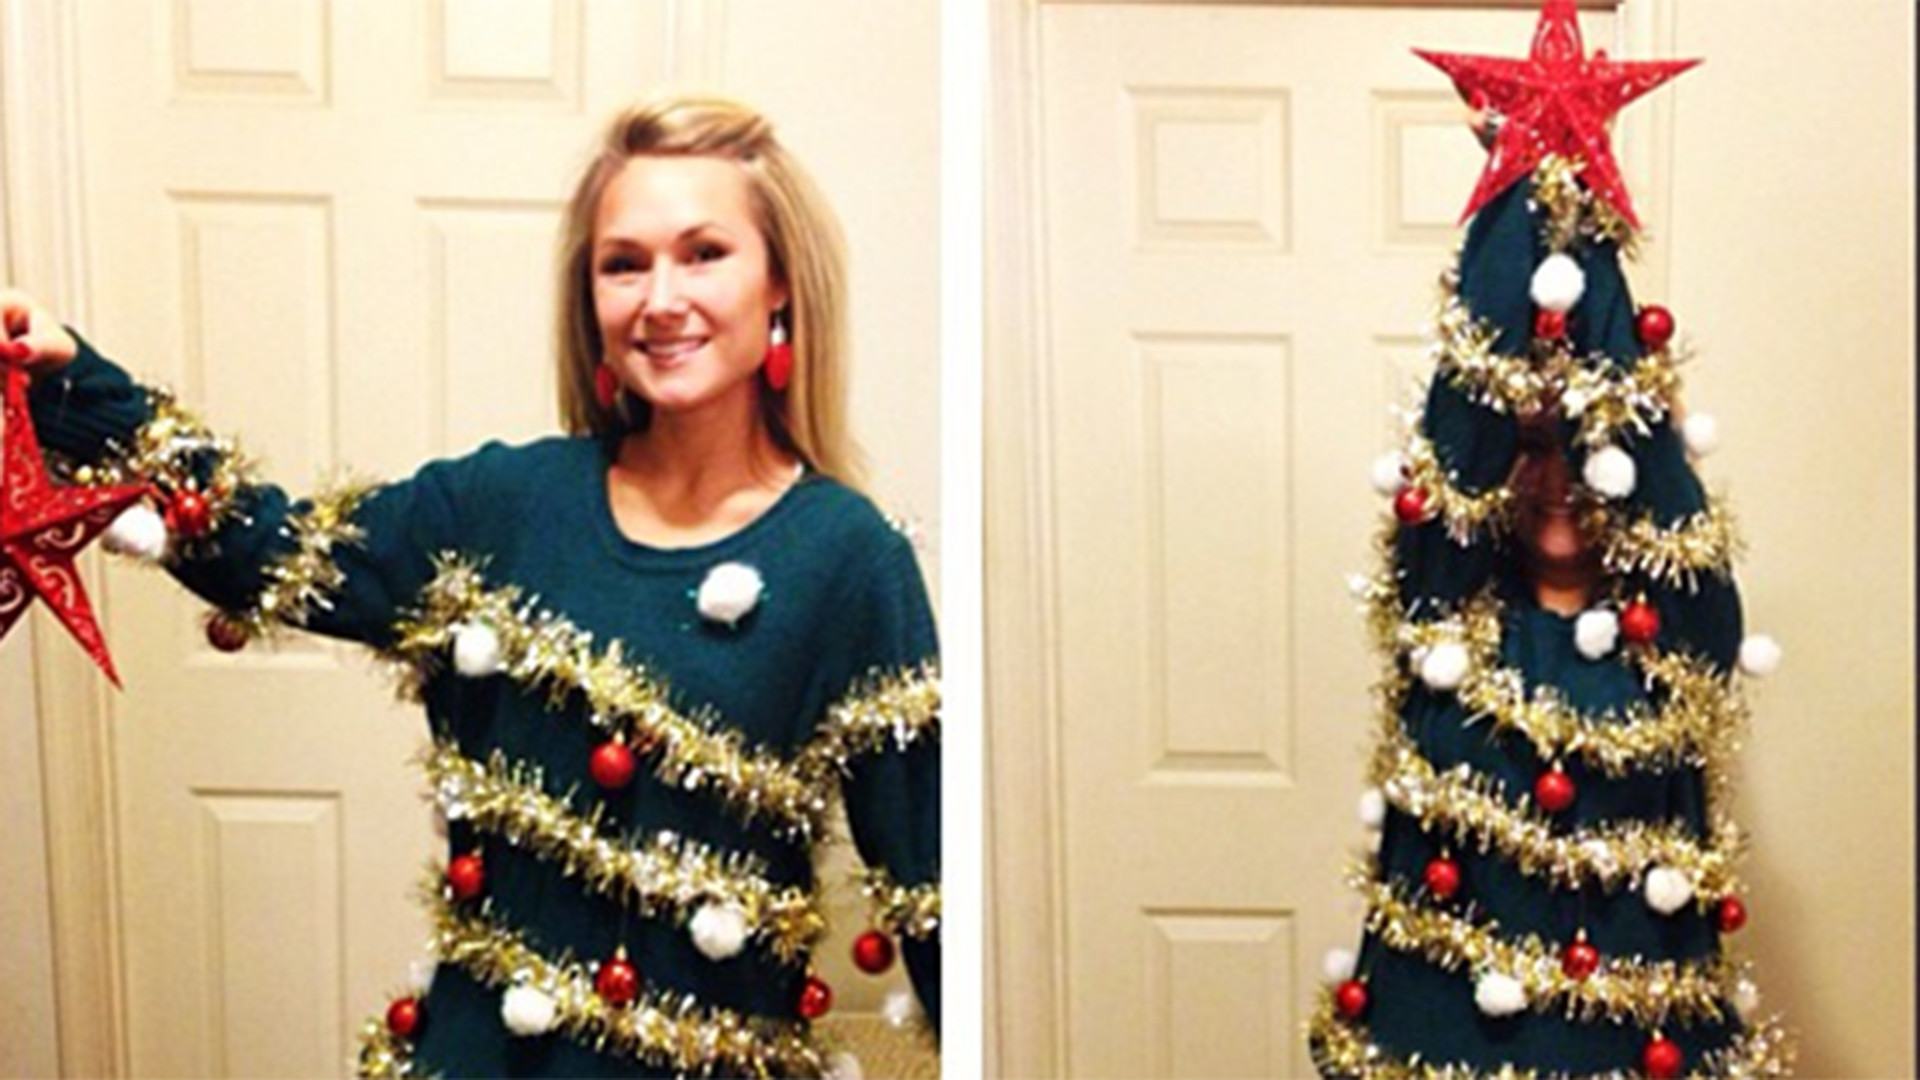 DIY Ugly Christmas Sweaters Pinterest
 7 DIY ugly Christmas sweaters from Pinterest TODAY